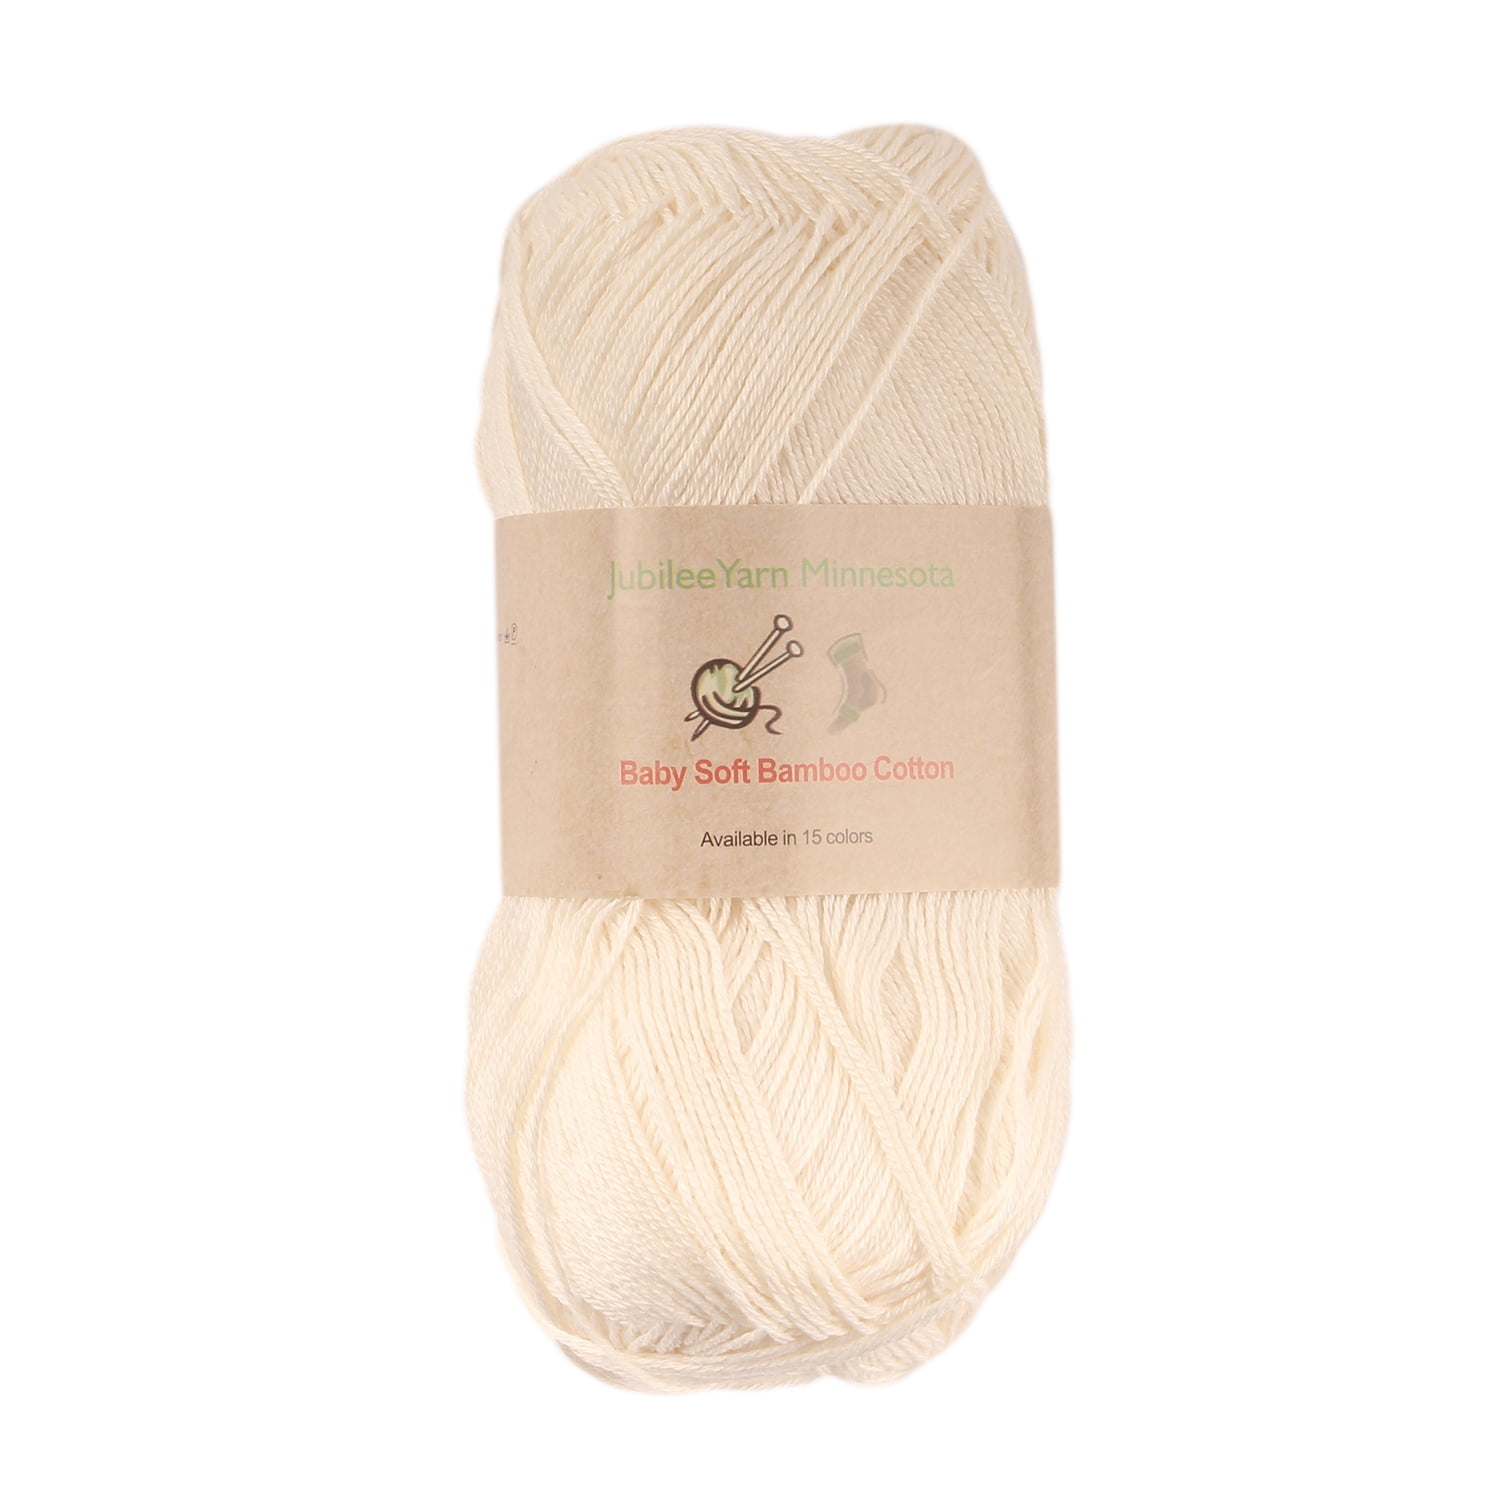 JubileeYarn Bamboo Cotton Sport Yarn - 50g/Skein - Shades of Neutral Tones - 4 Skeins